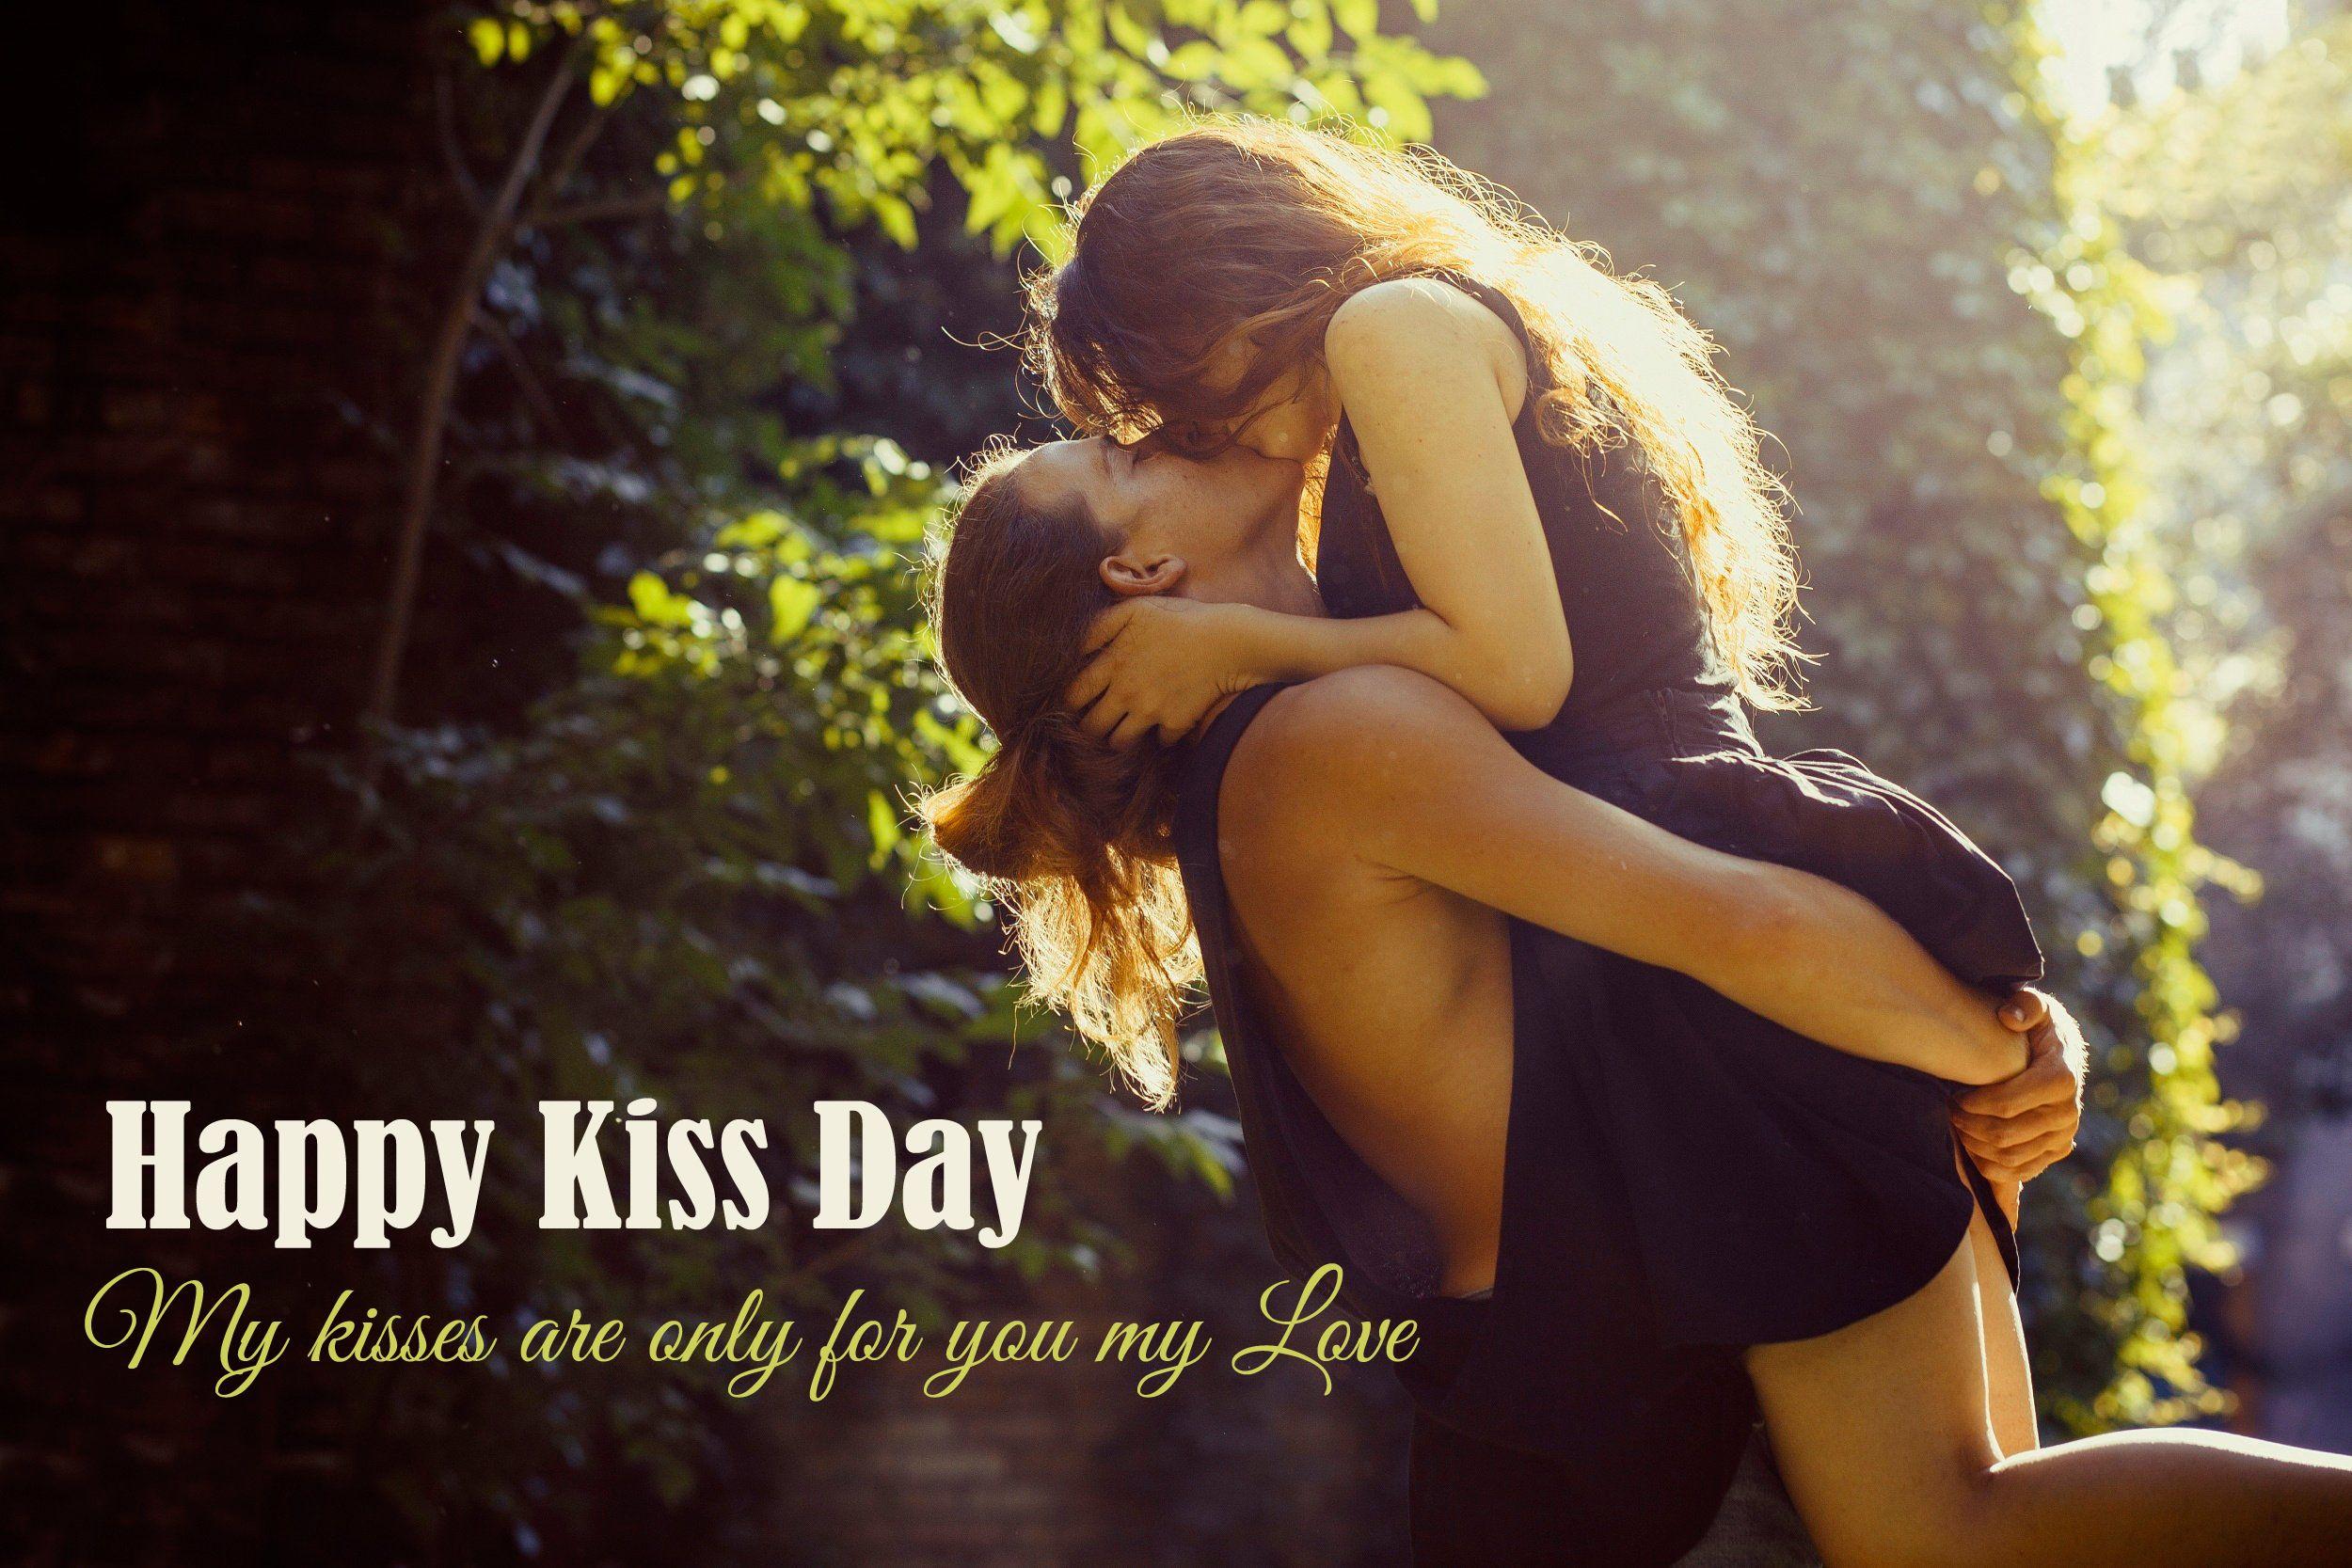 Happy Kiss Day 2017 Image, Whatsapp Dp & HD Wallpaper Free Download